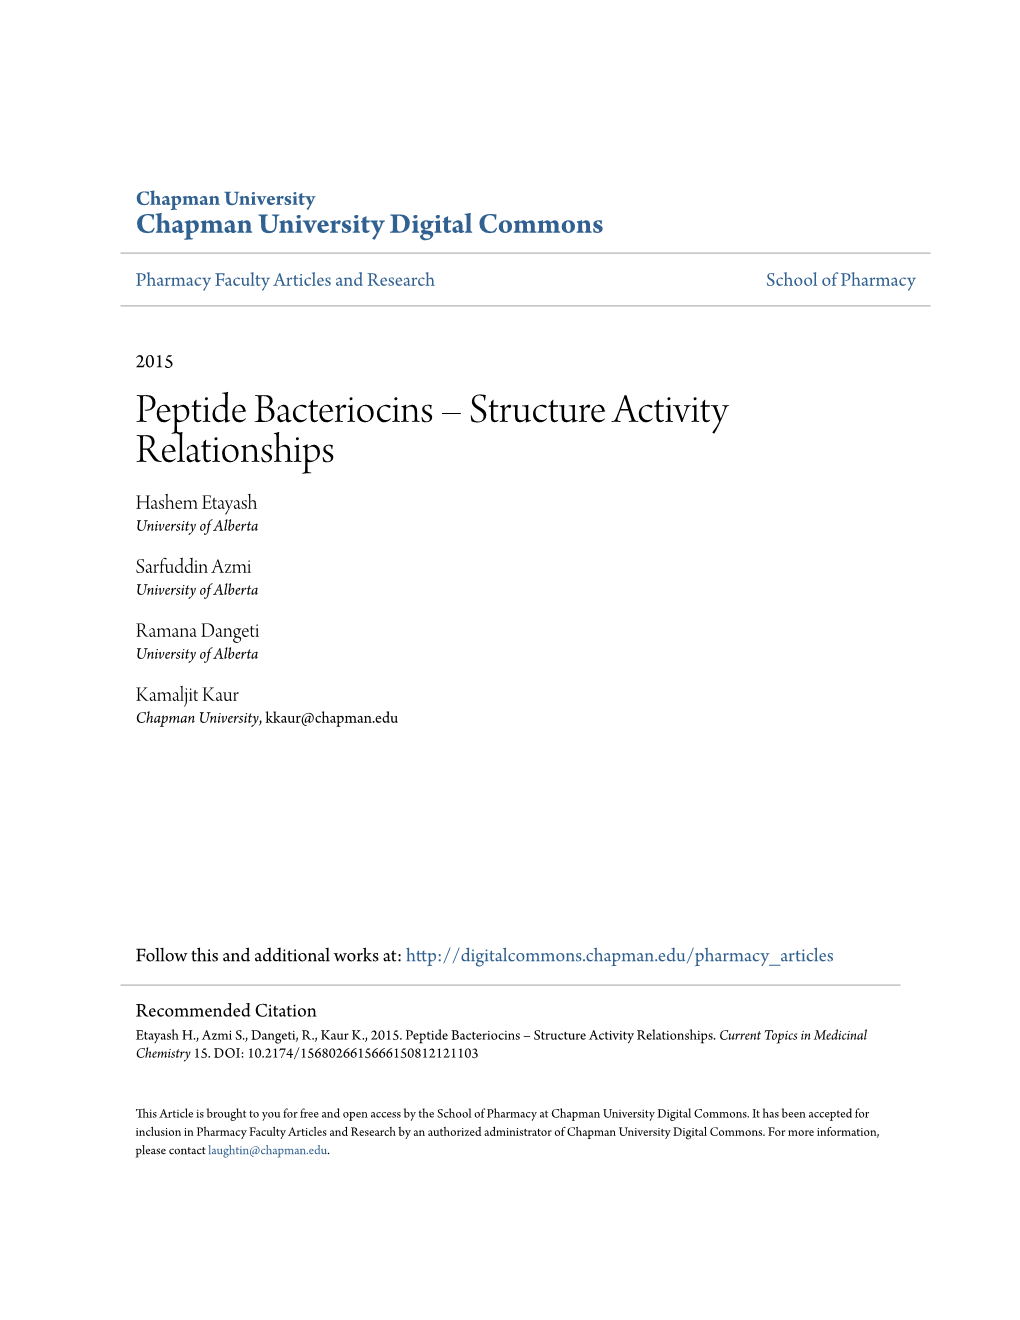 Peptide Bacteriocins – Structure Activity Relationships Hashem Etayash University of Alberta